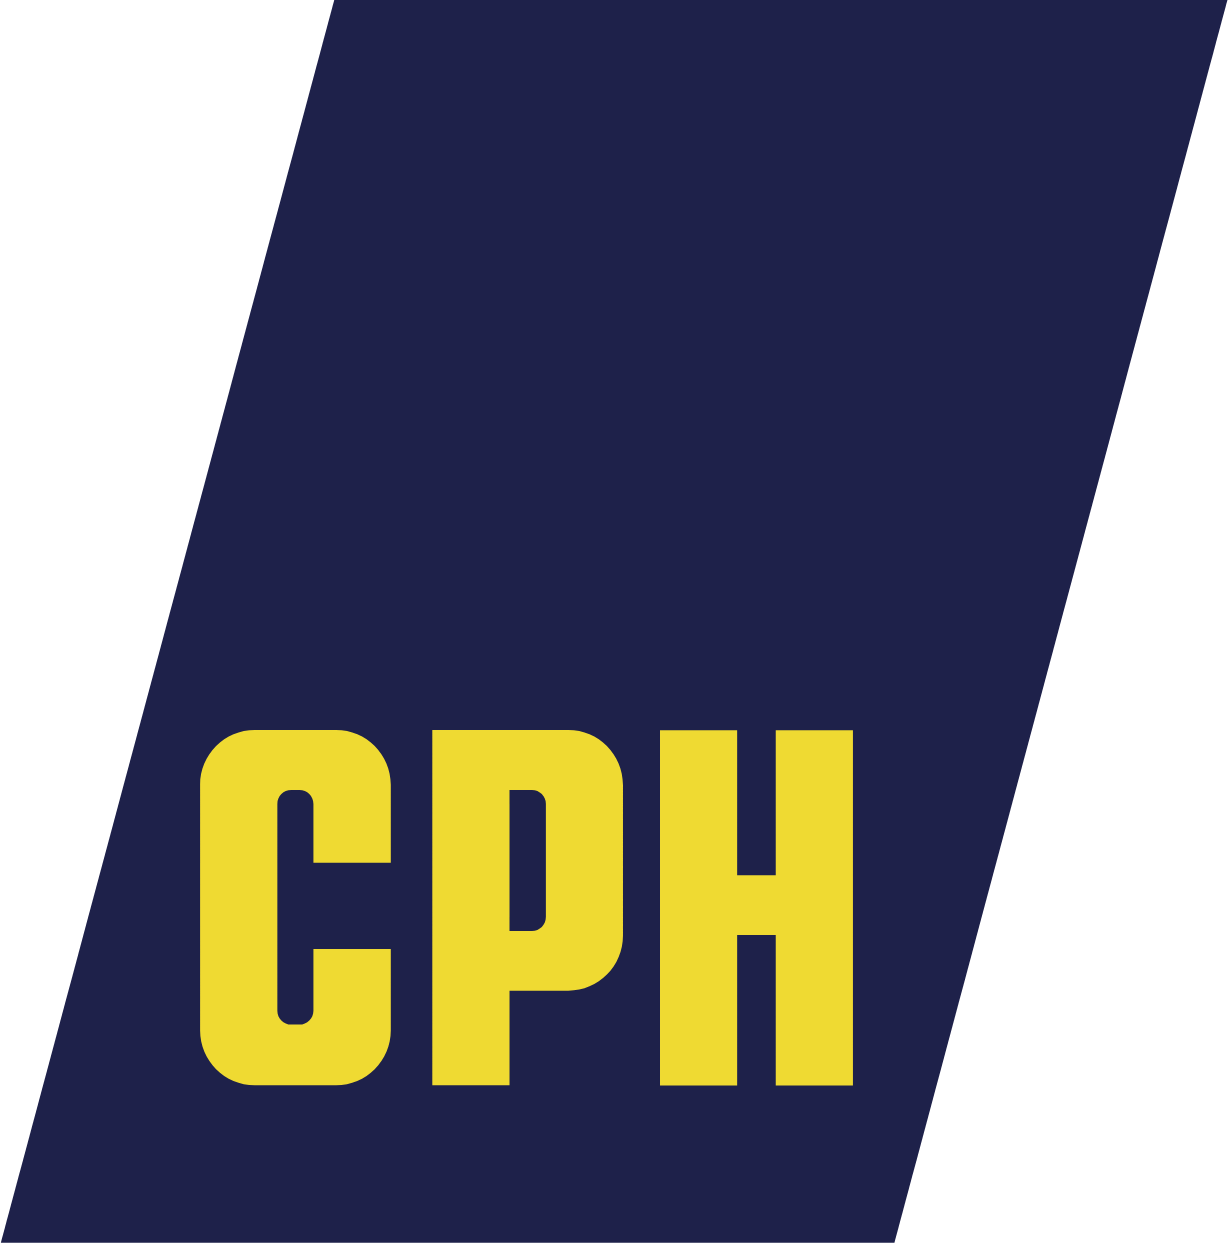 Copenhagen Airport logo (PNG transparent)